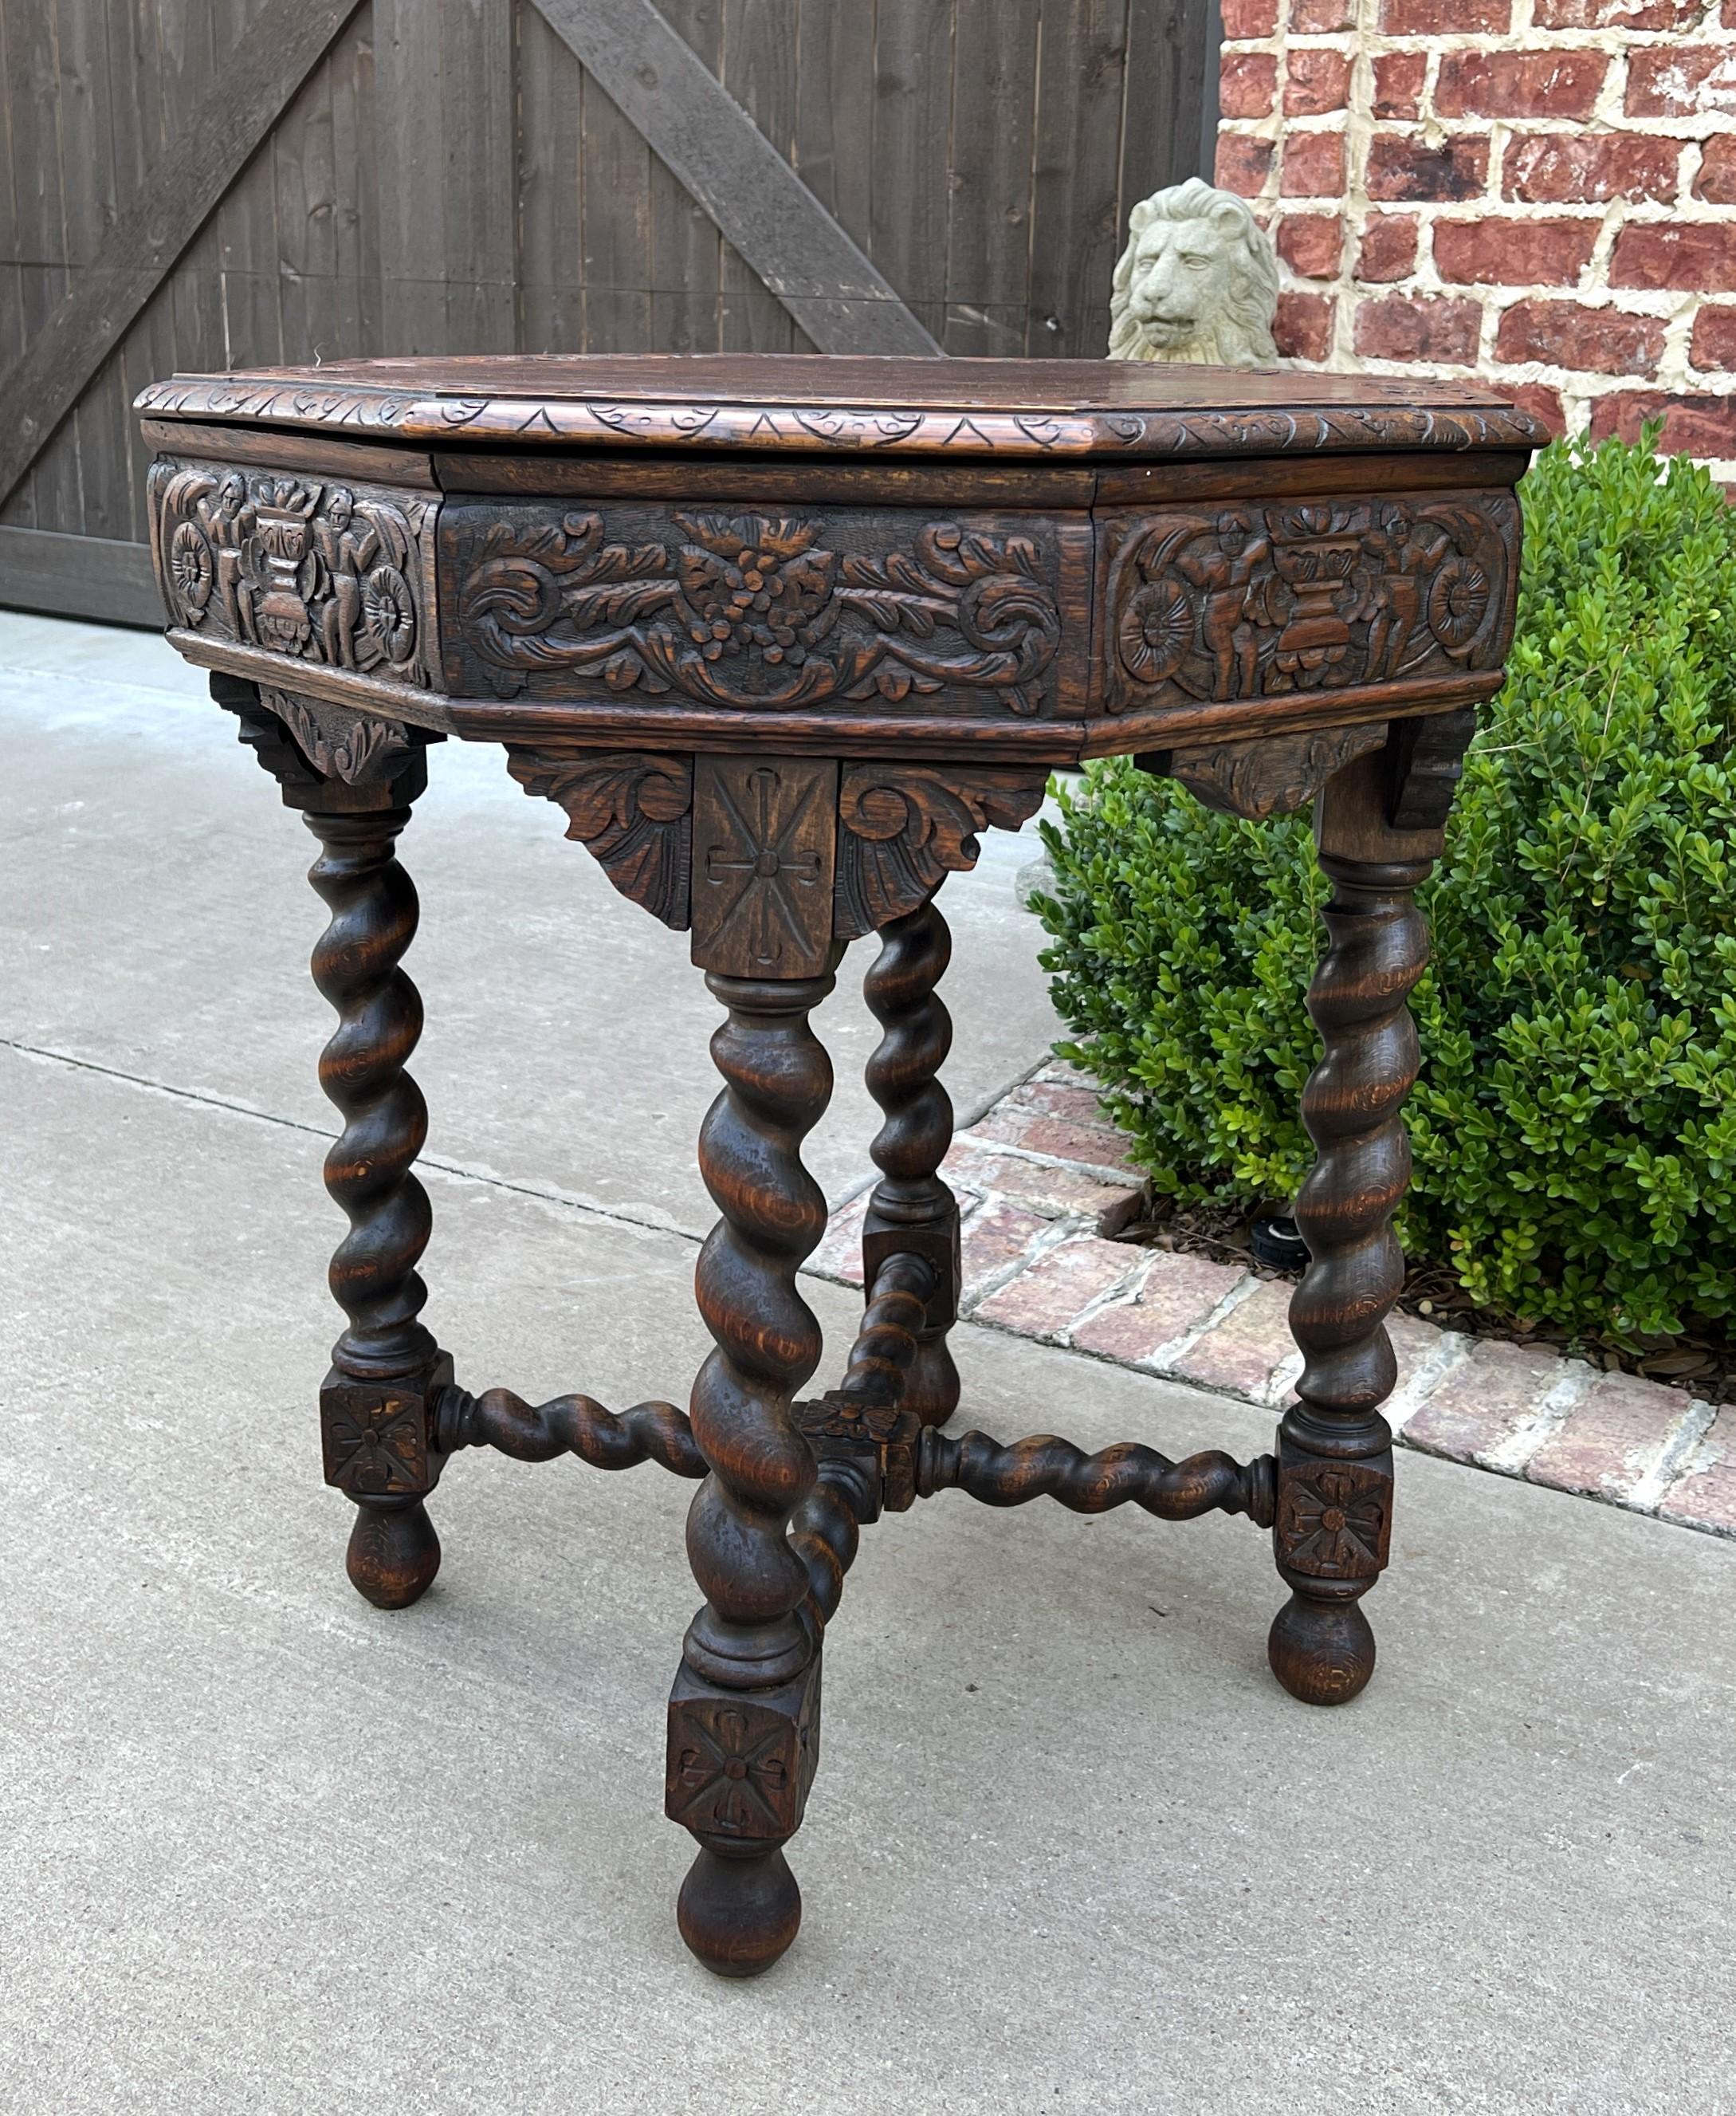 Antique French Table Barley Twist Octagonal Renaissance Revival Carved Oak 19thc For Sale 9